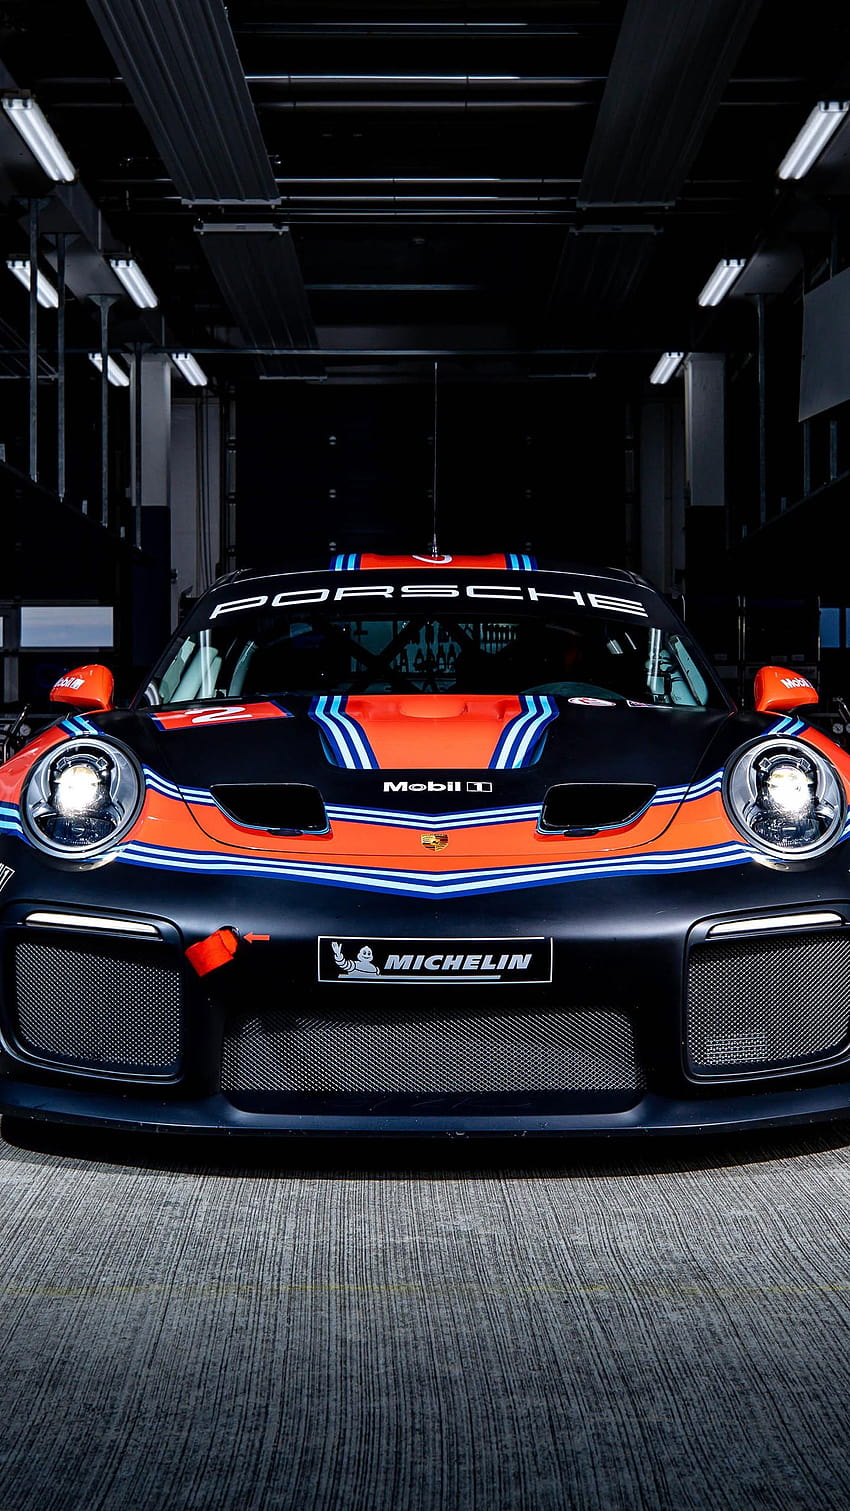 Black Porsche 911 sports car opened during daytime 4K wallpaper download